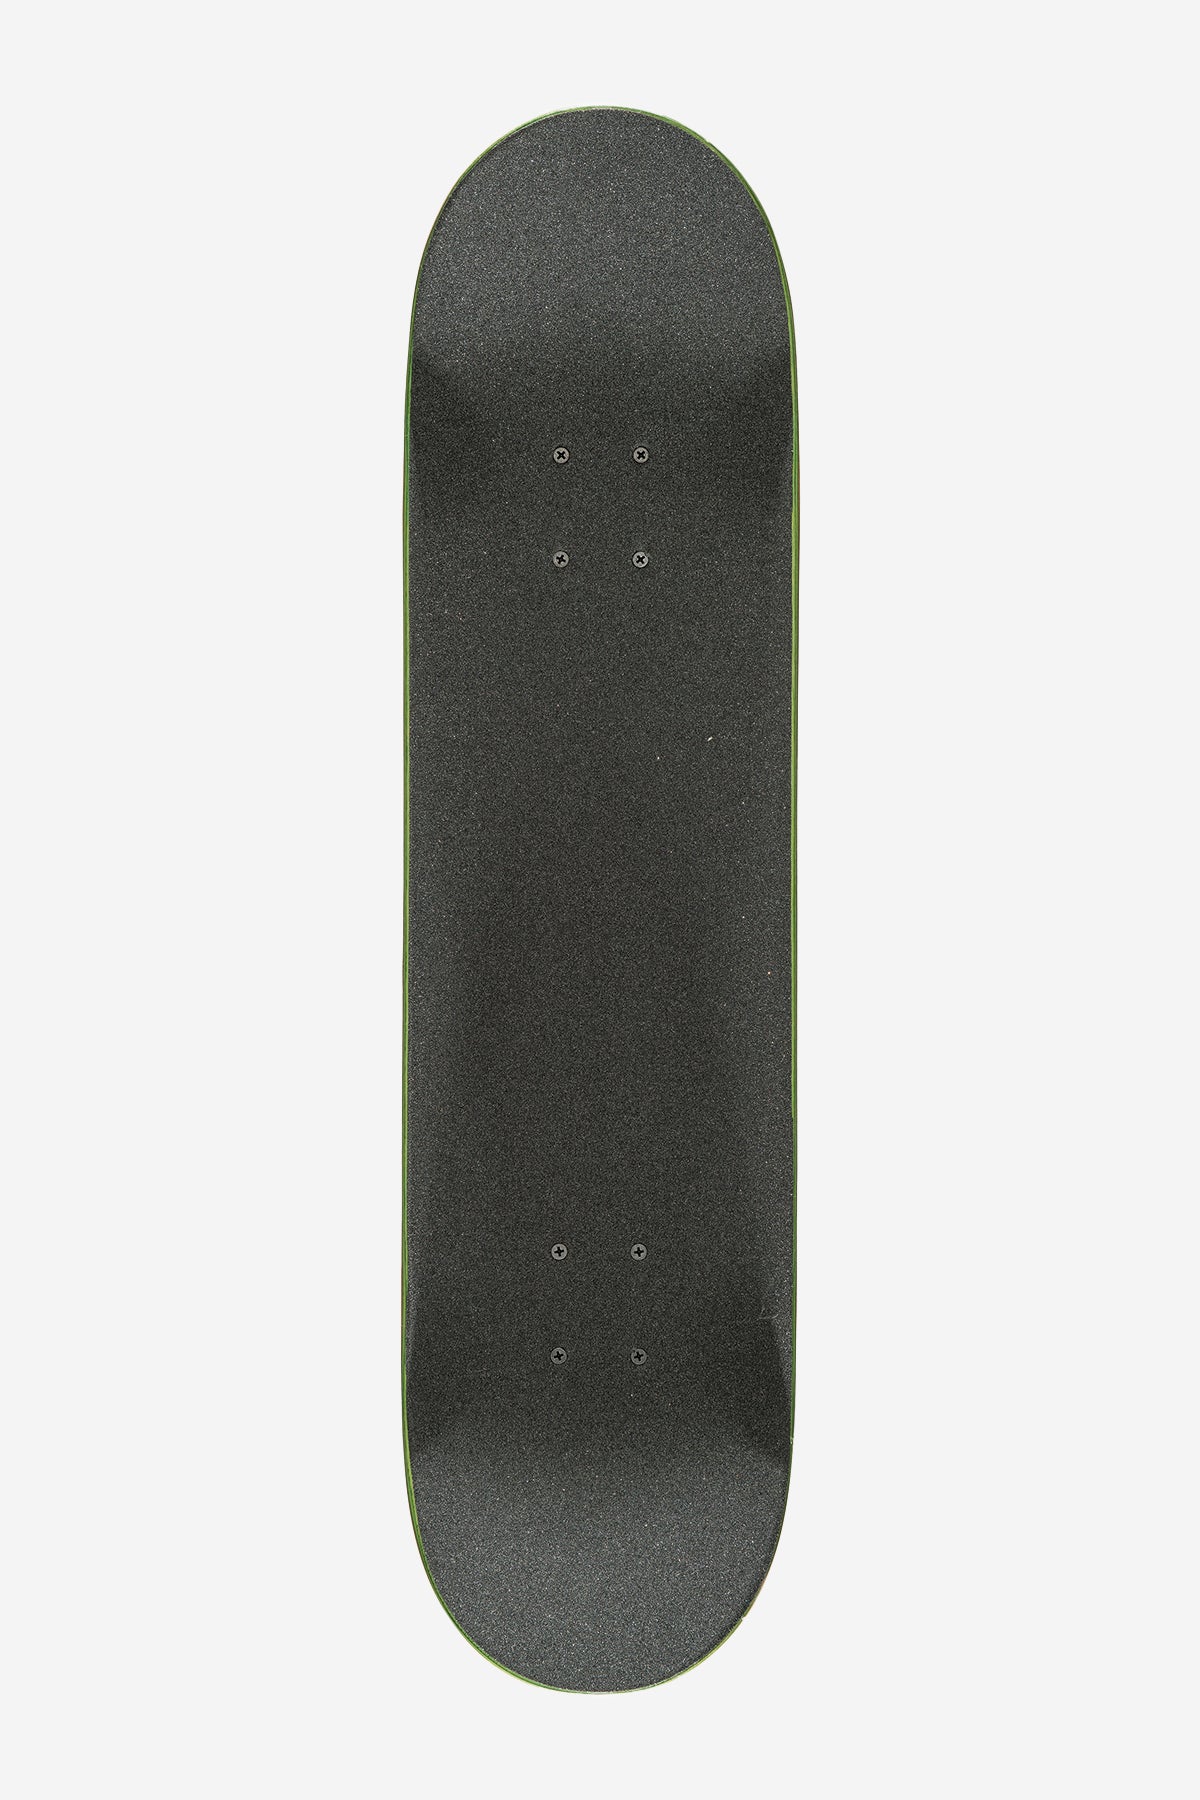 Globe - G1 Palm Off - Nero - 8,0" Completo Skateboard